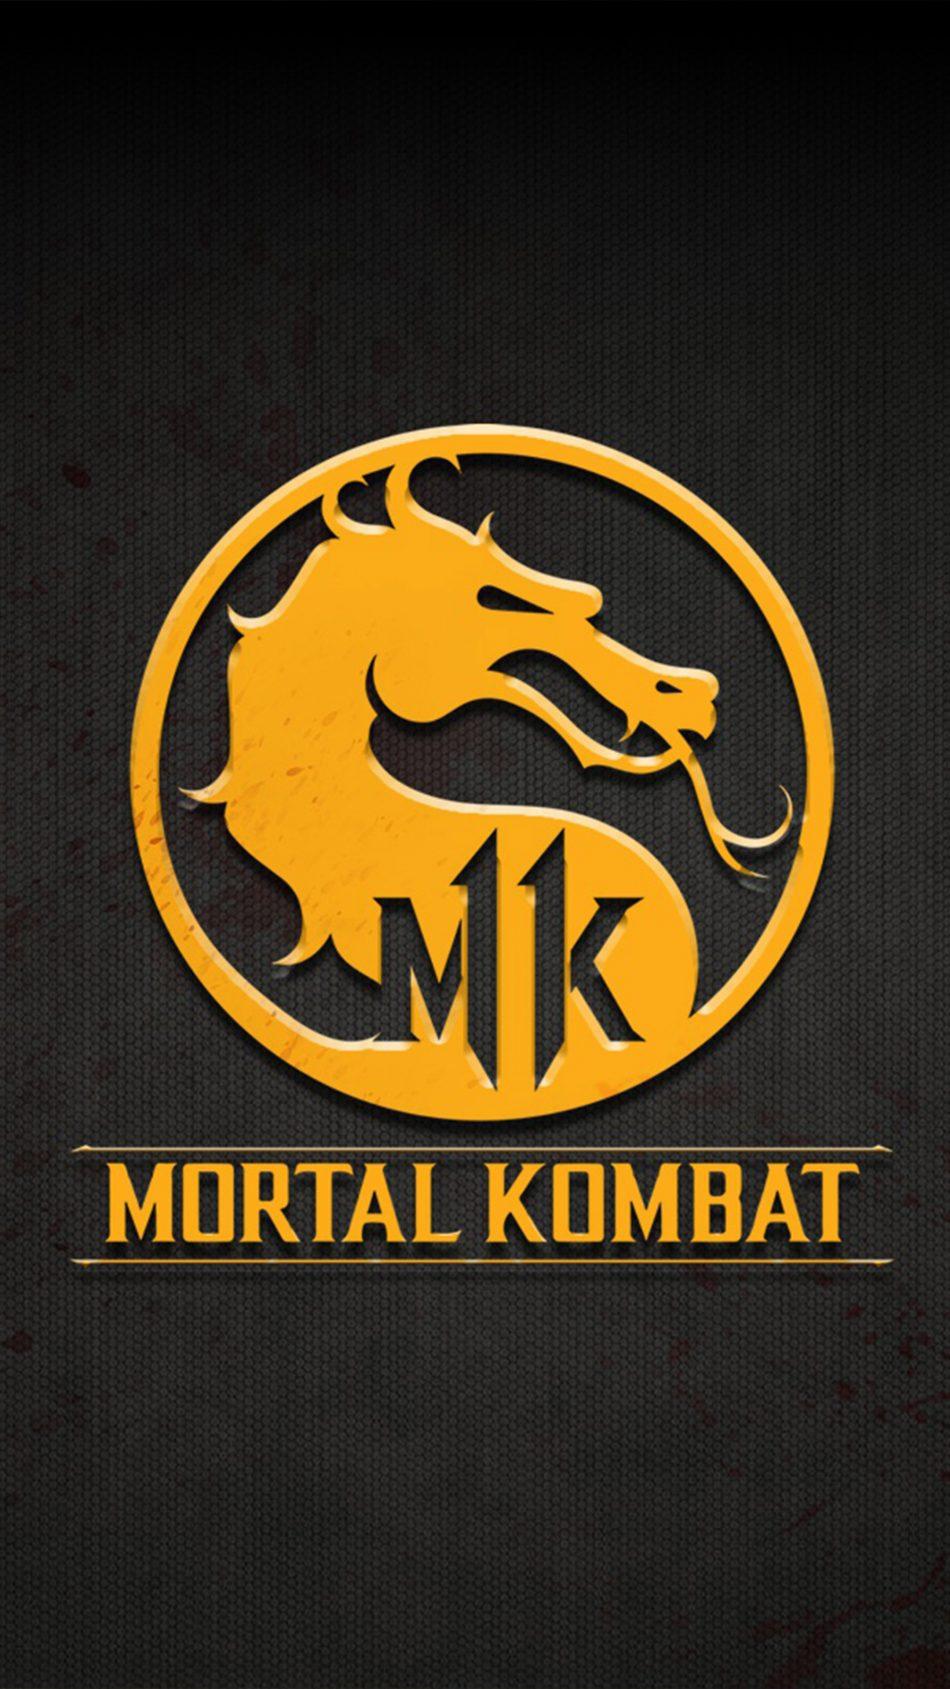 Download Mortal Kombat 11 Logo Free Pure 4K Ultra HD Mobile Wallpaper